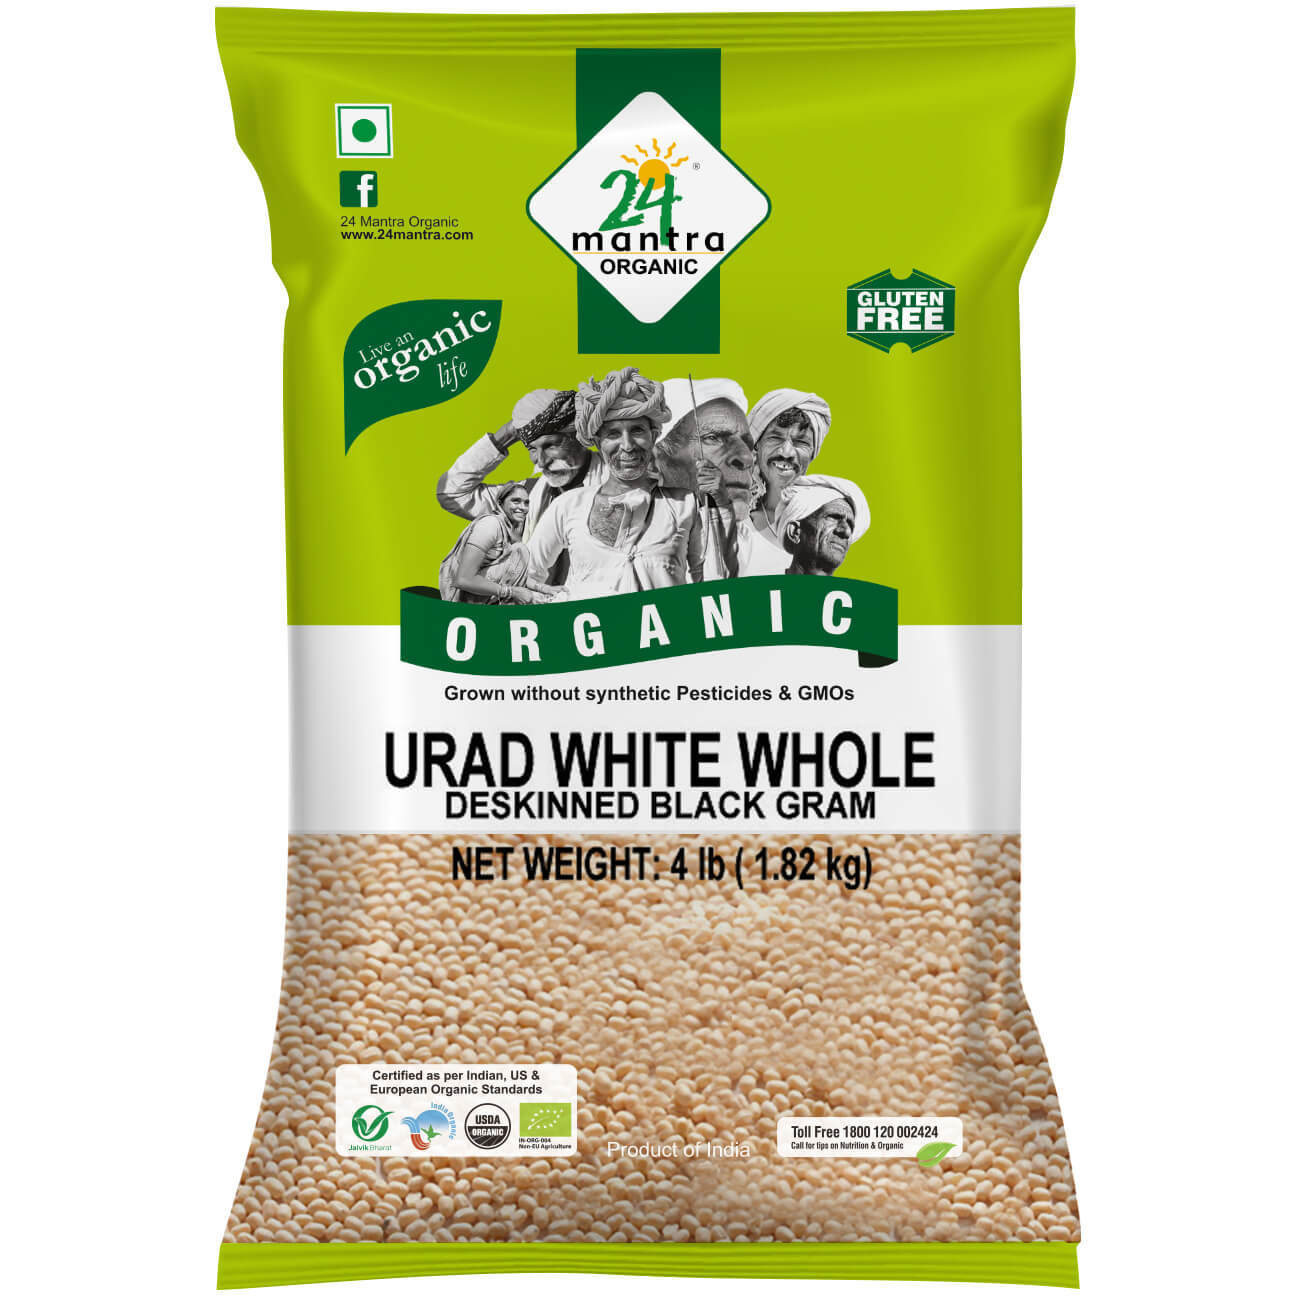 24 Mantra Organic Urad White Whole - 2 Lb (908 Gm)